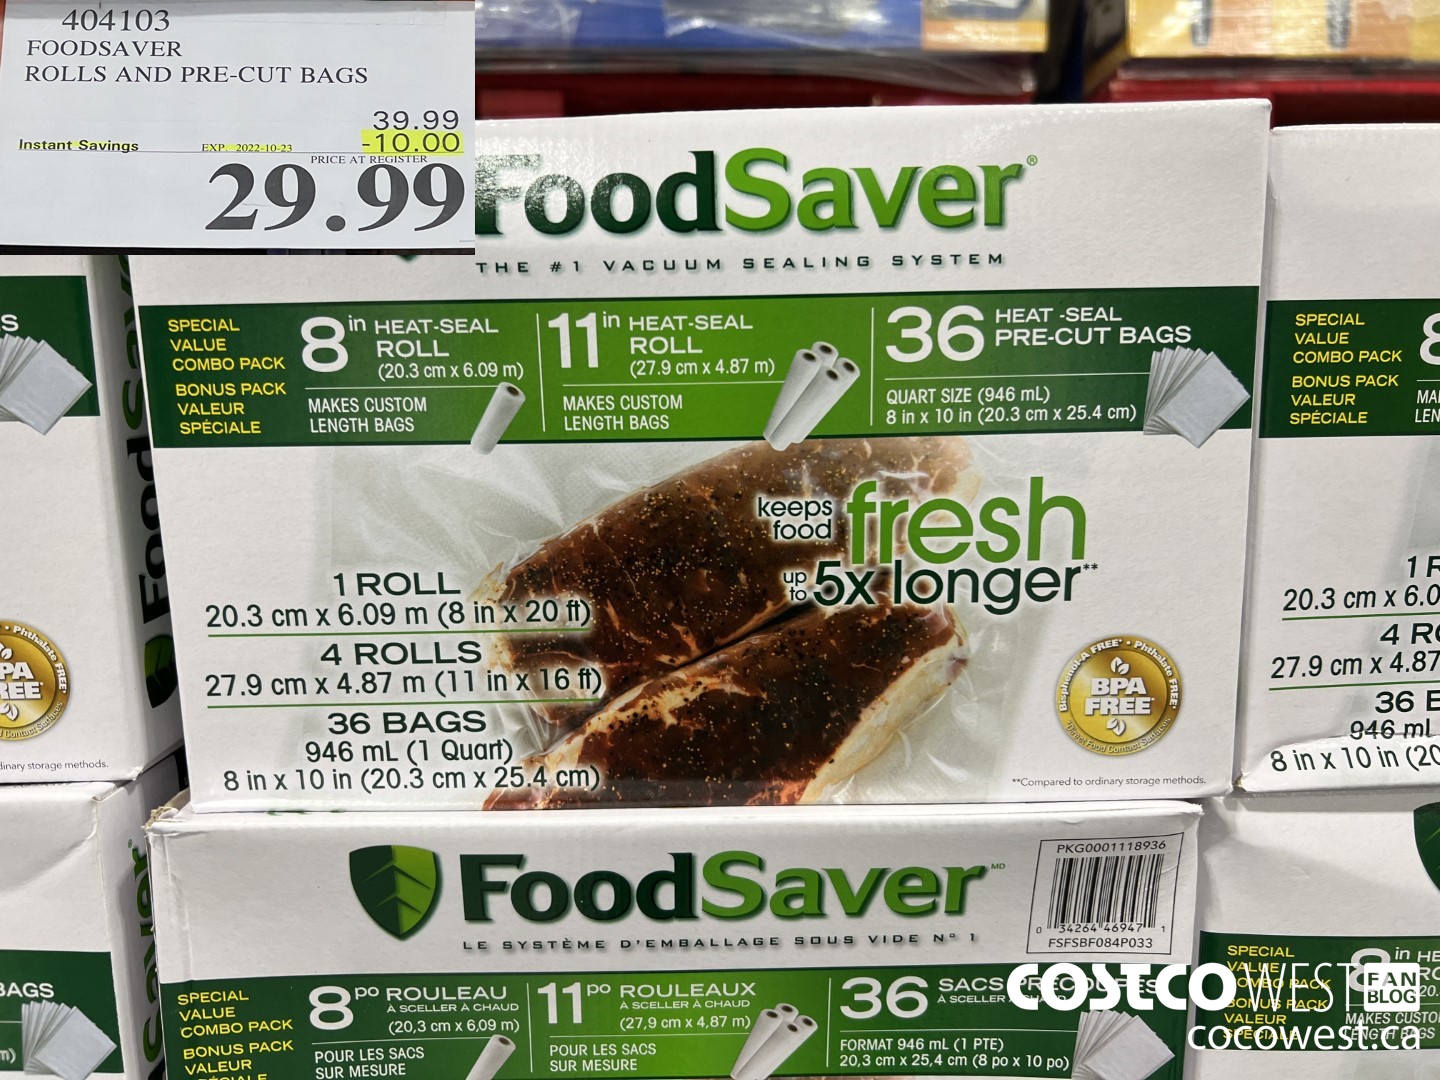 Costco Sale Item Review Kirkland Signature Vacuum Sealing Bags Variety Pack  VS Food Saver Comparison  YouTube